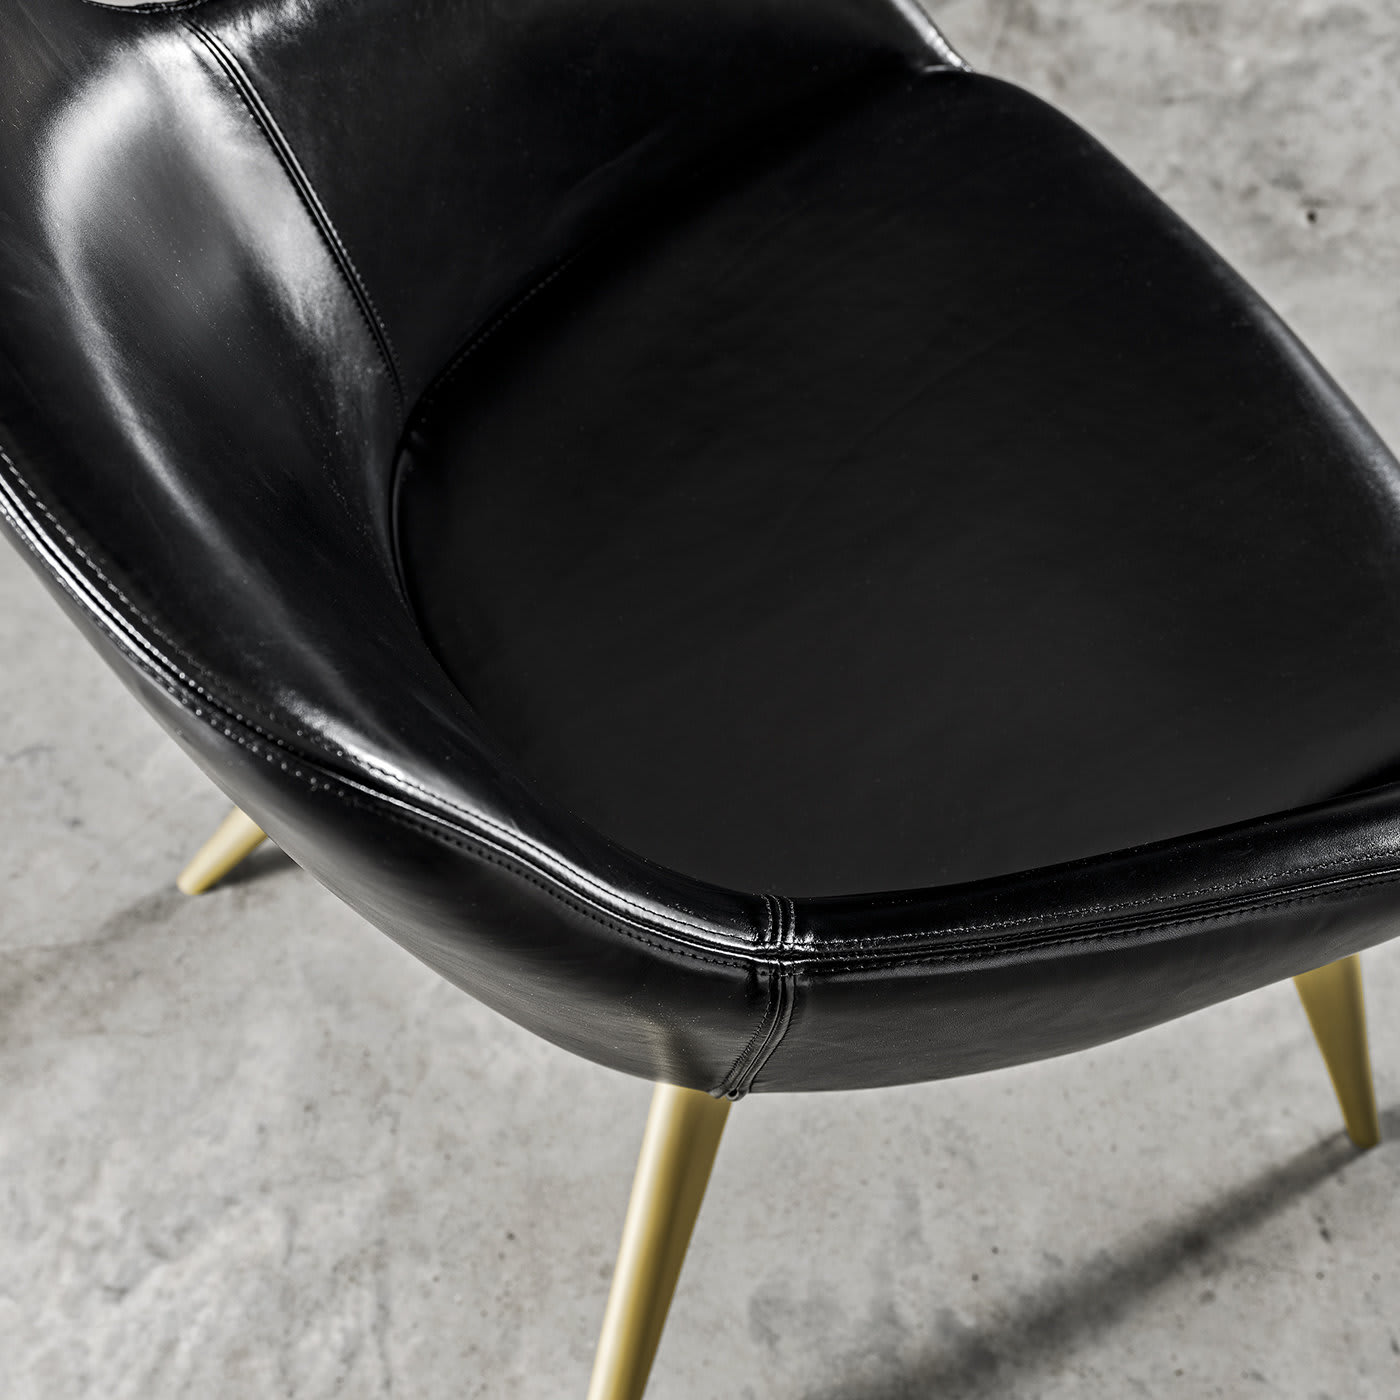 Elba Black Chair with Armrests - Meroni & Colzani